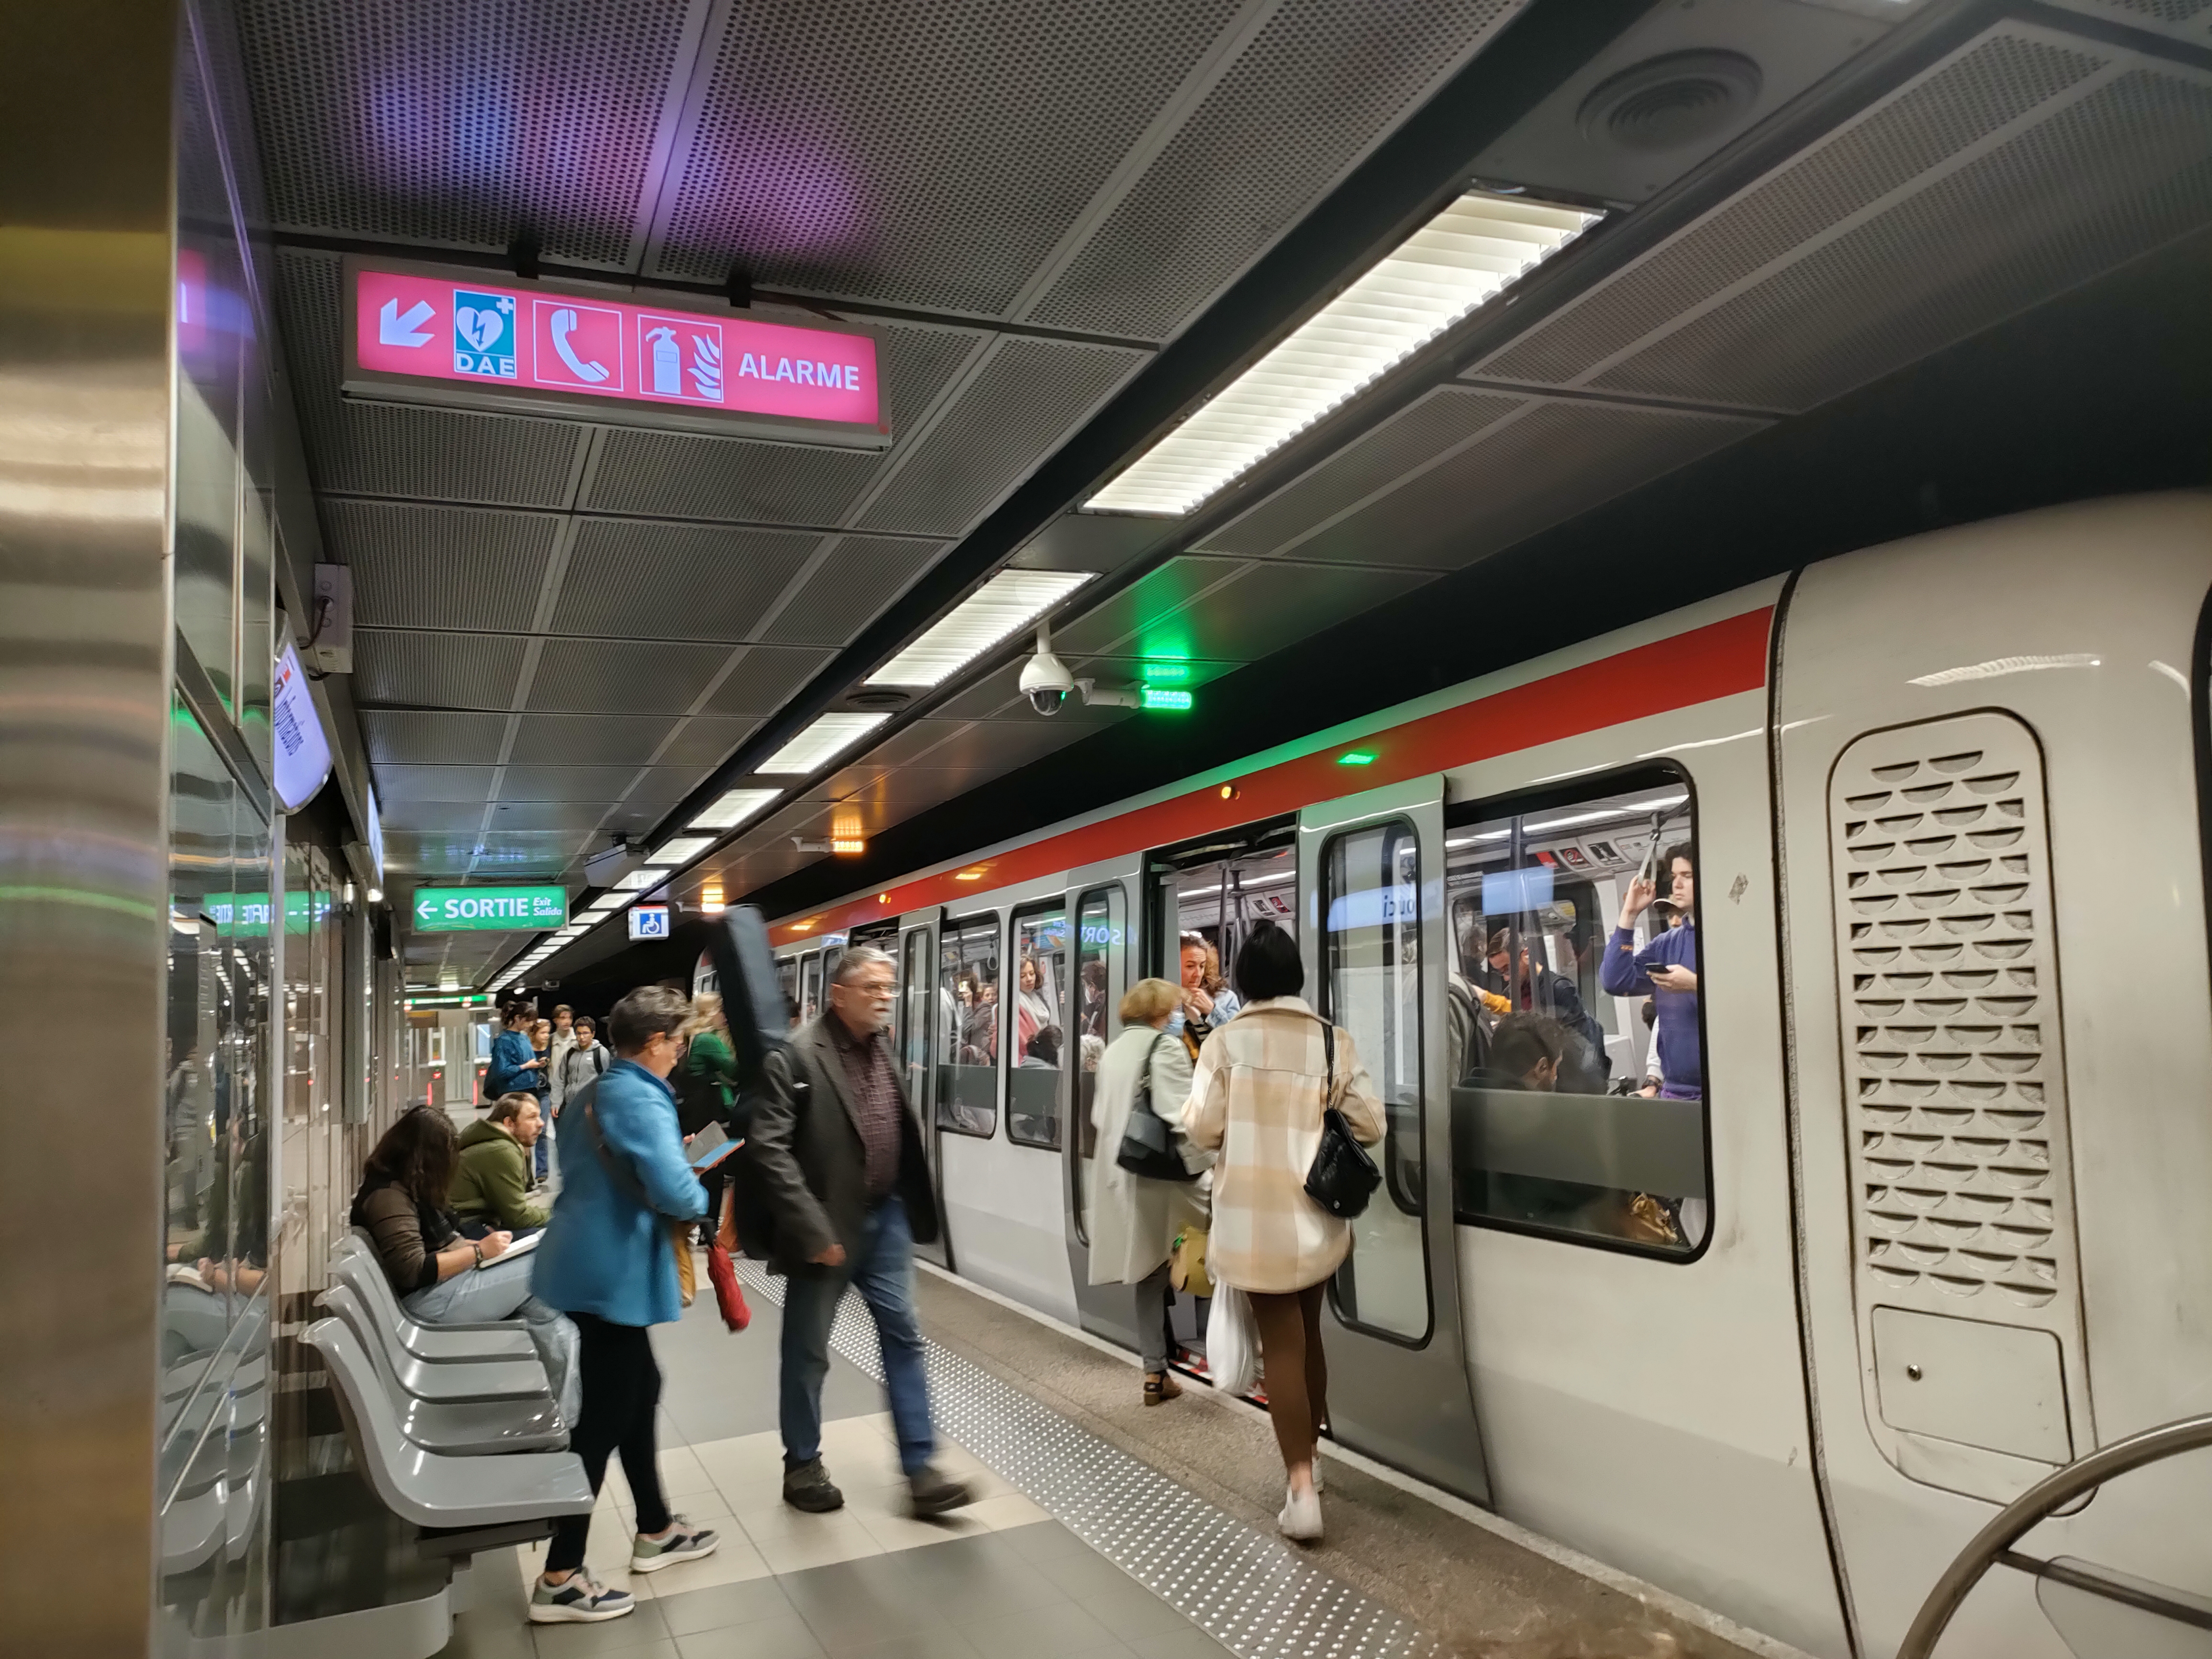 Affluences solution deployed in Lyon metro system